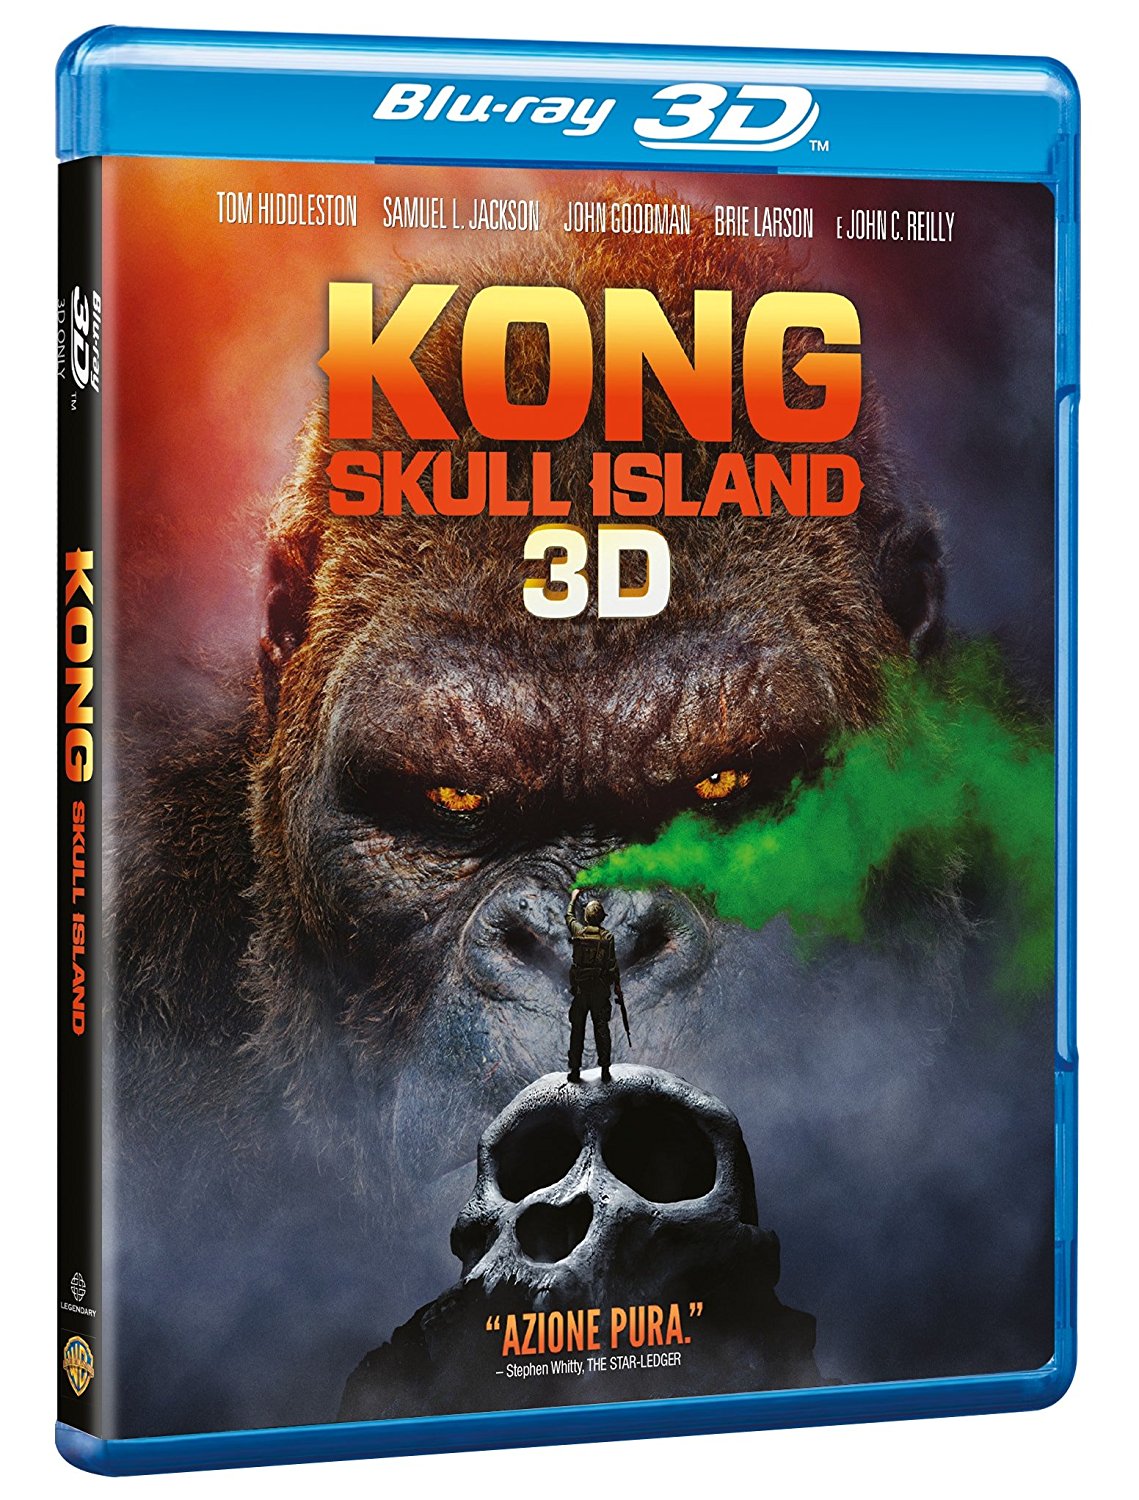 KONG: SKULL ISLAND (3D) (BLU-RAY 3D)